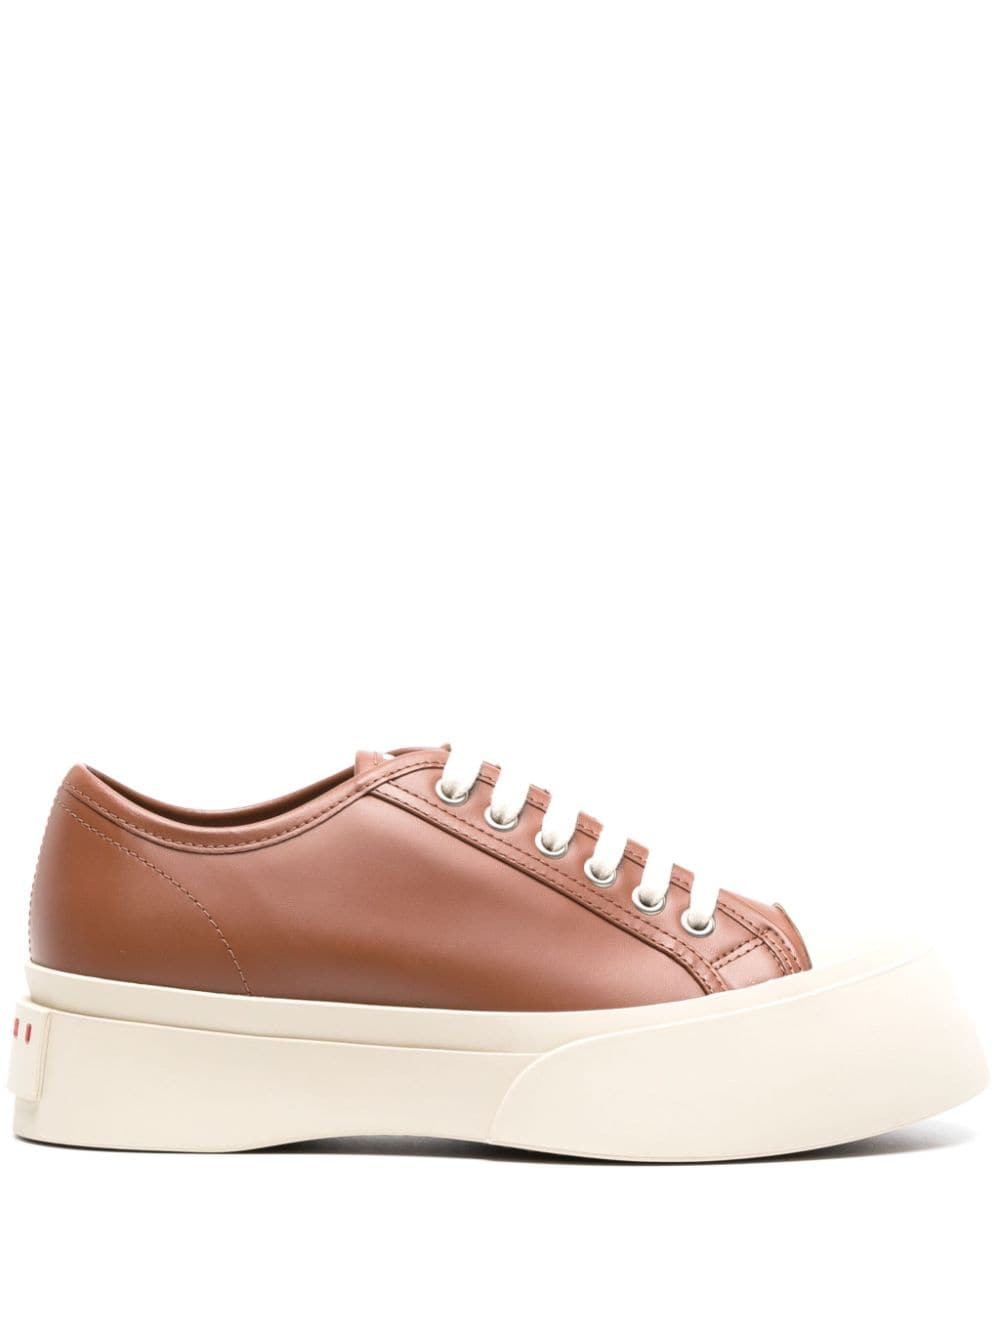 Marni Pablo leather flatform sneakers - Brown von Marni